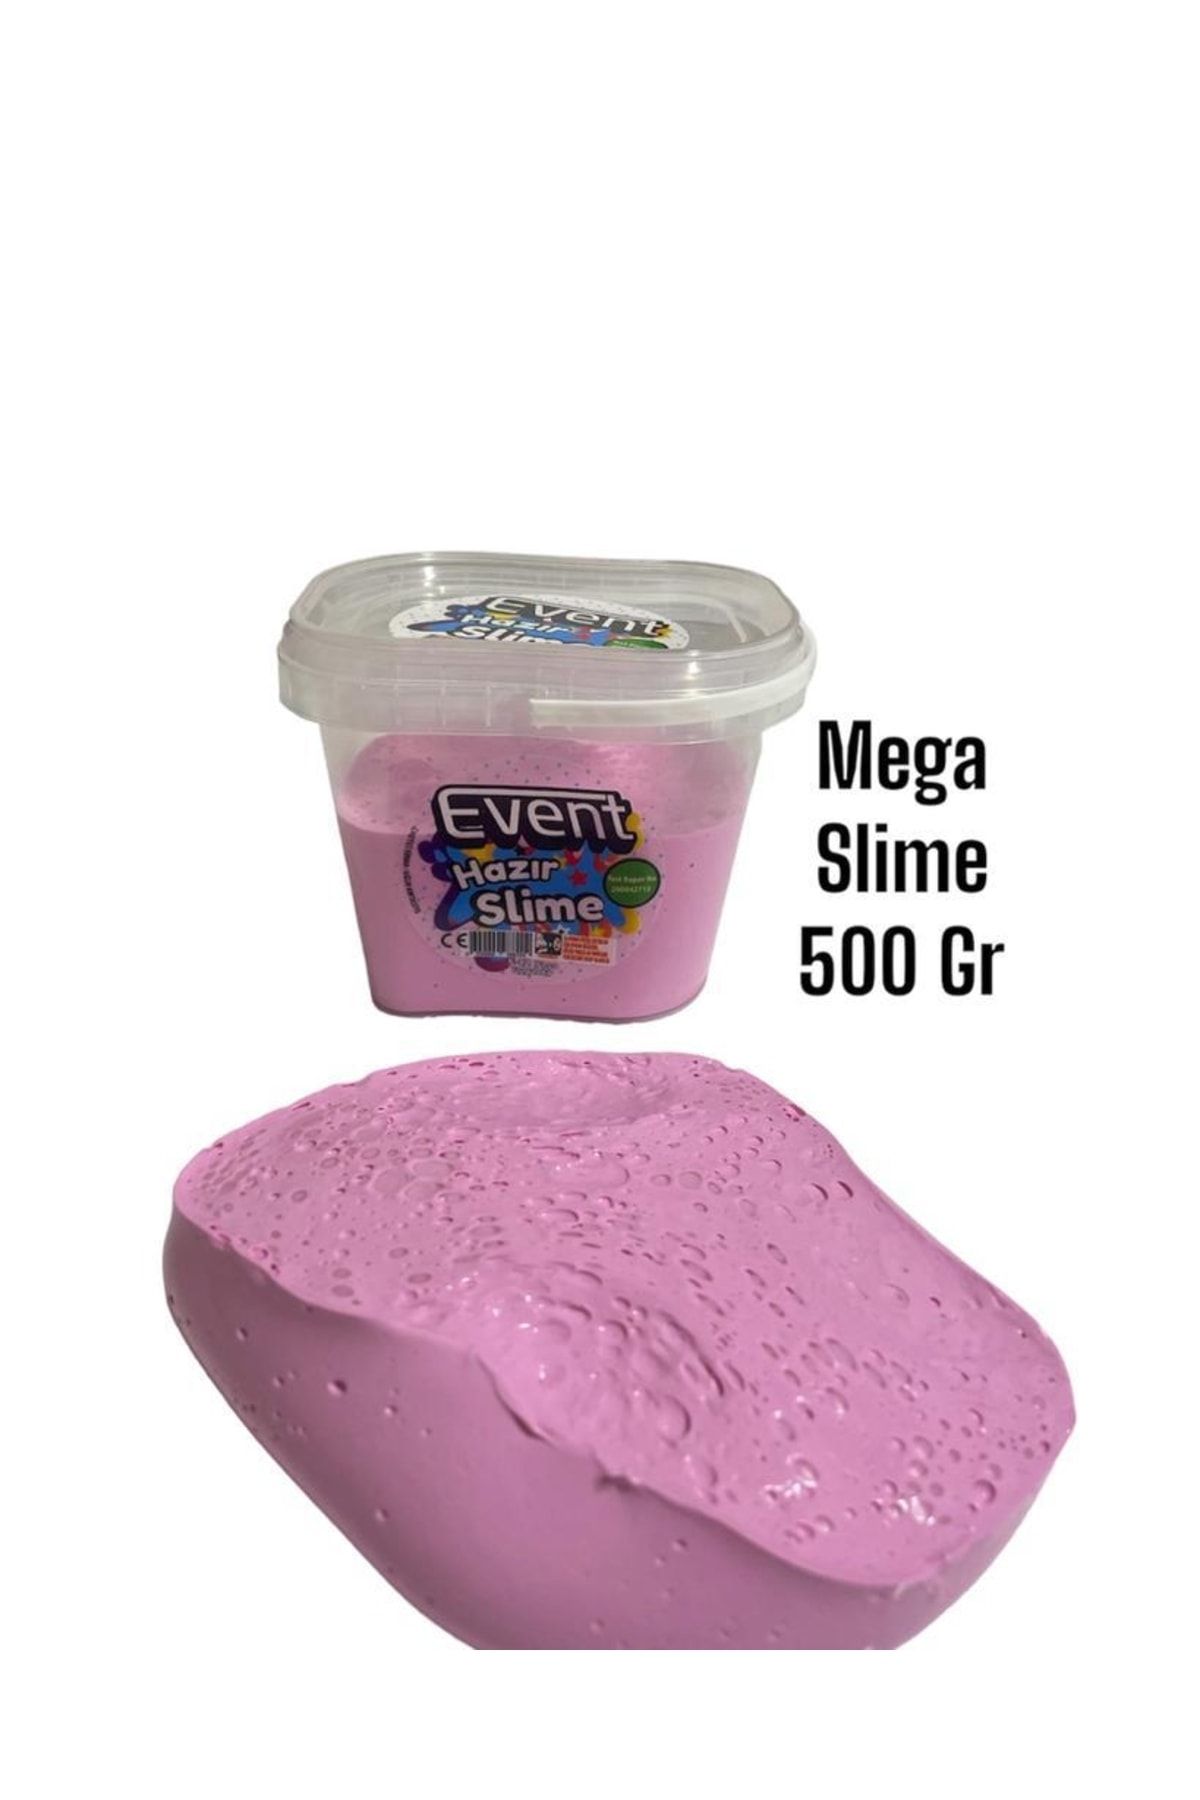 EVENT Slime Mega Jumbo Boy 500 Gr Test Raporludur.